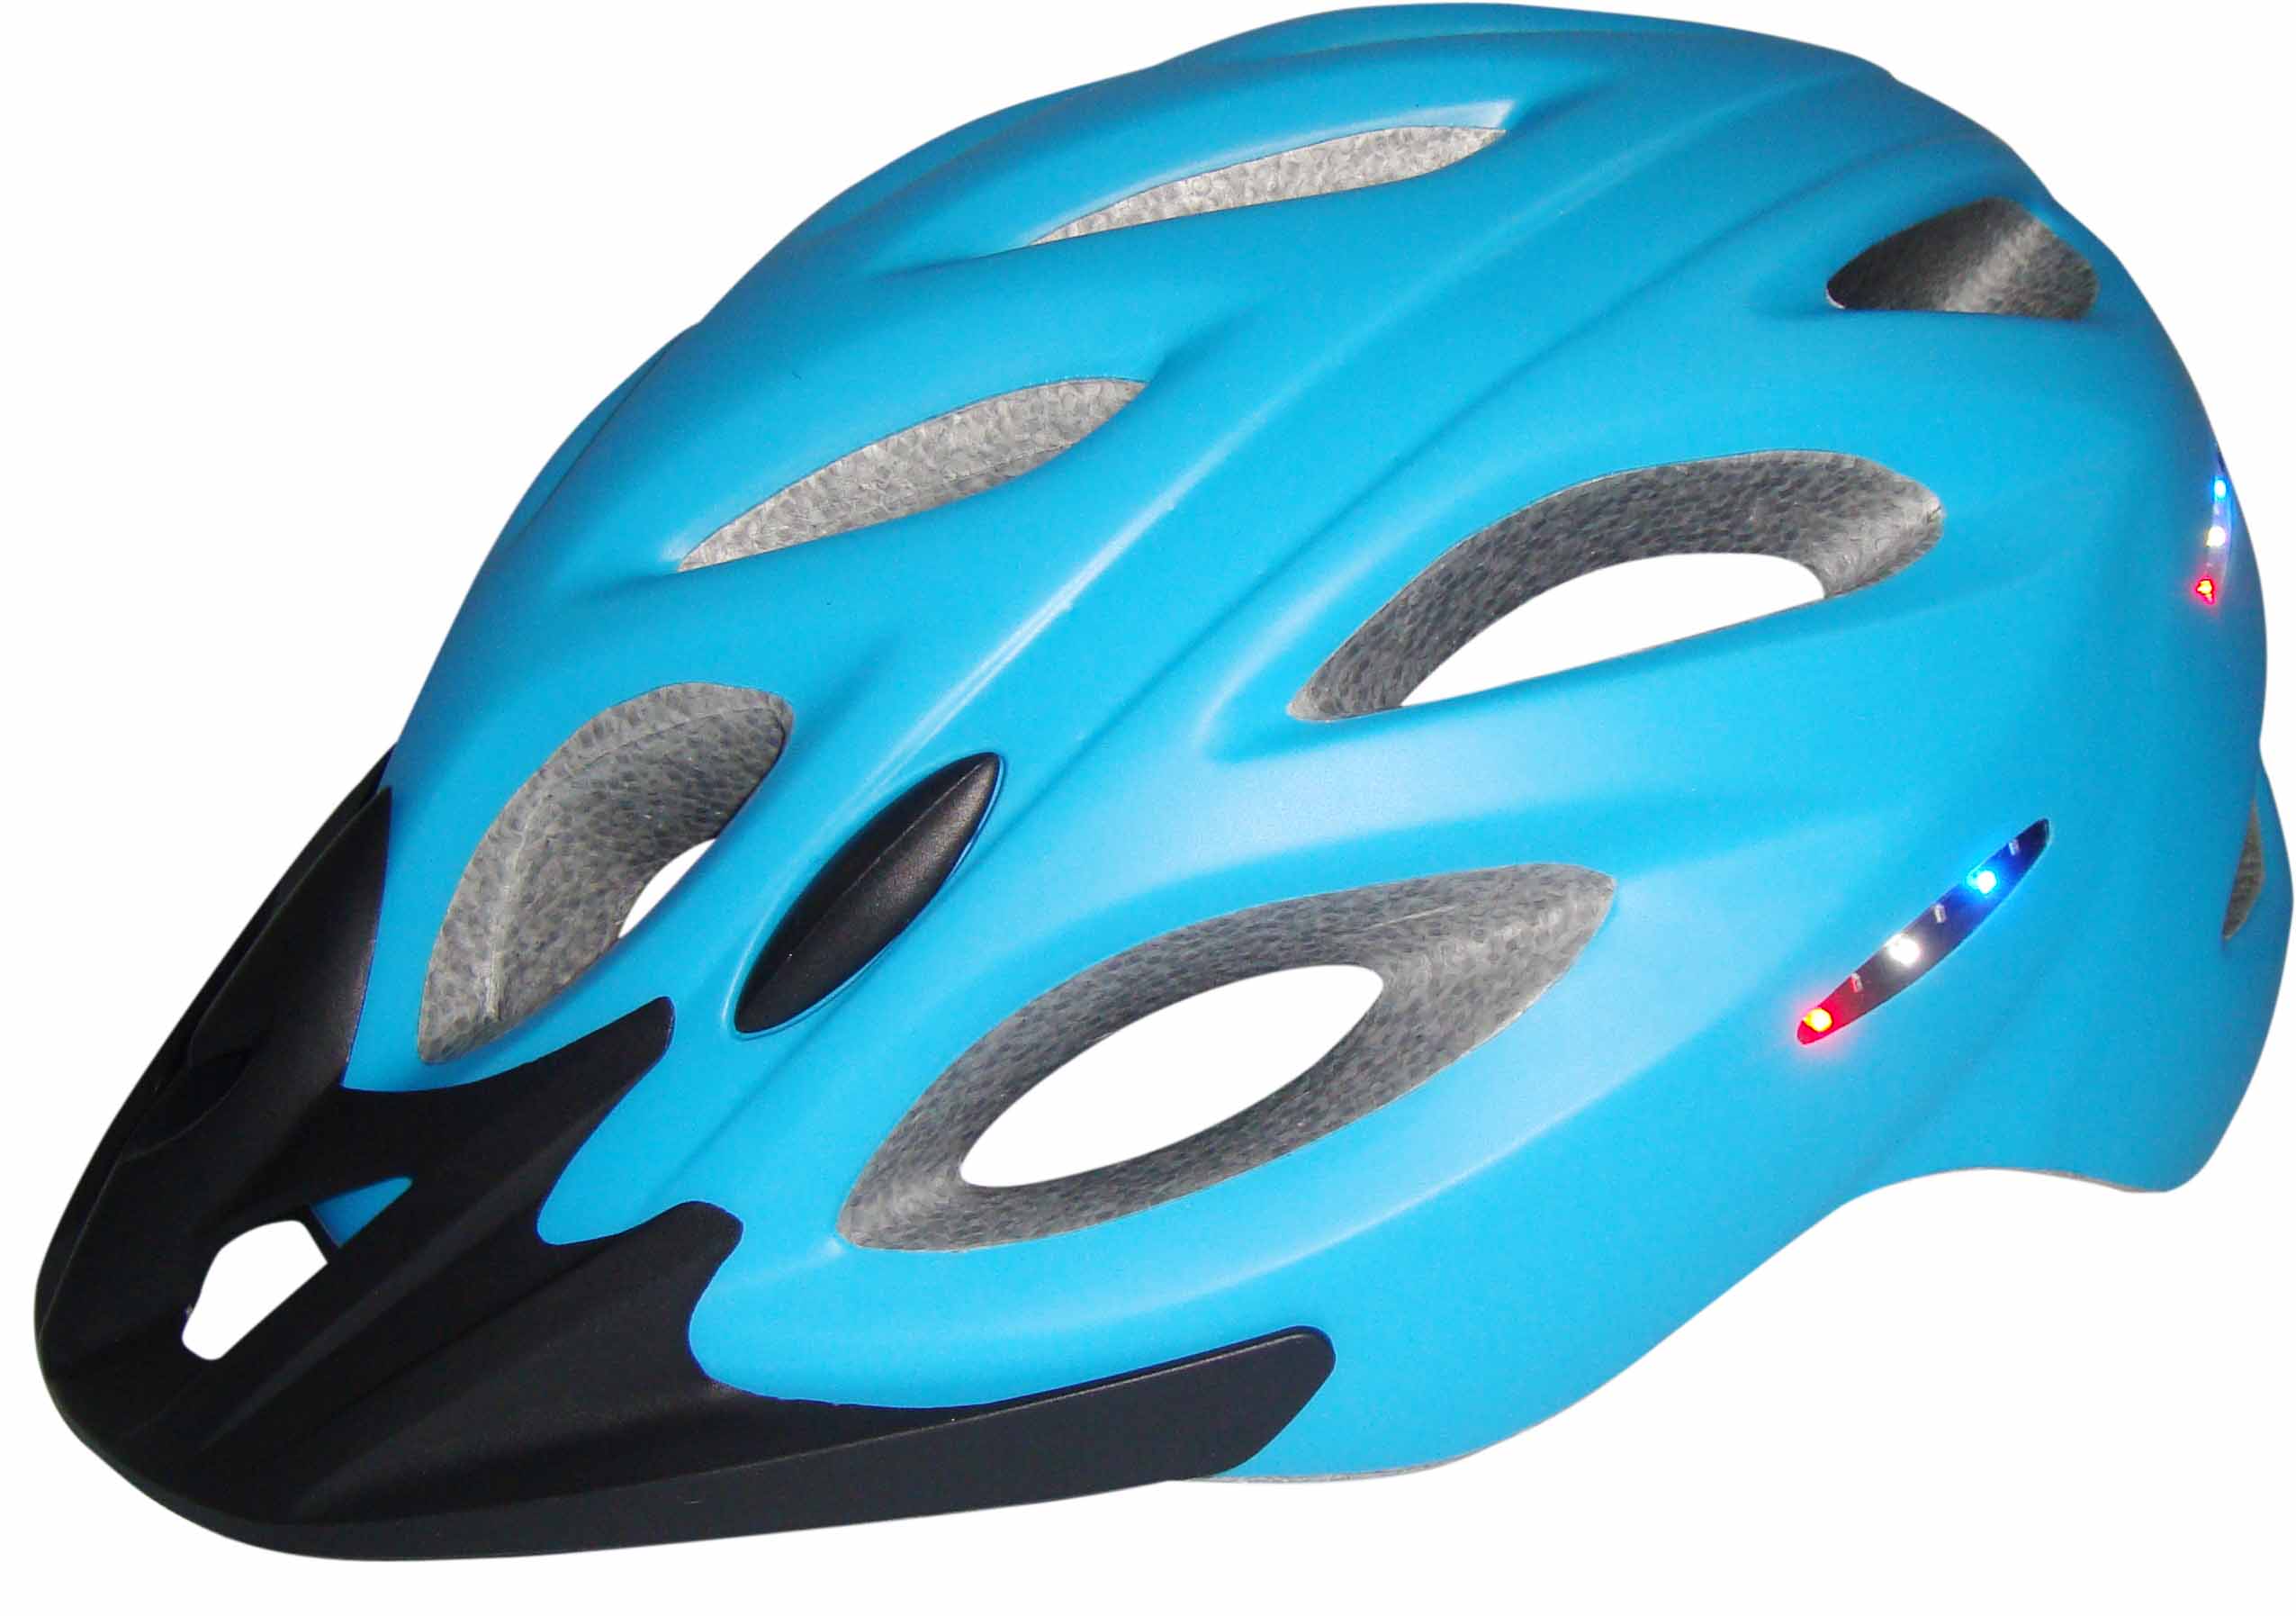 led light helmet for cycling, CE bike helmet light intergrated AU-L01